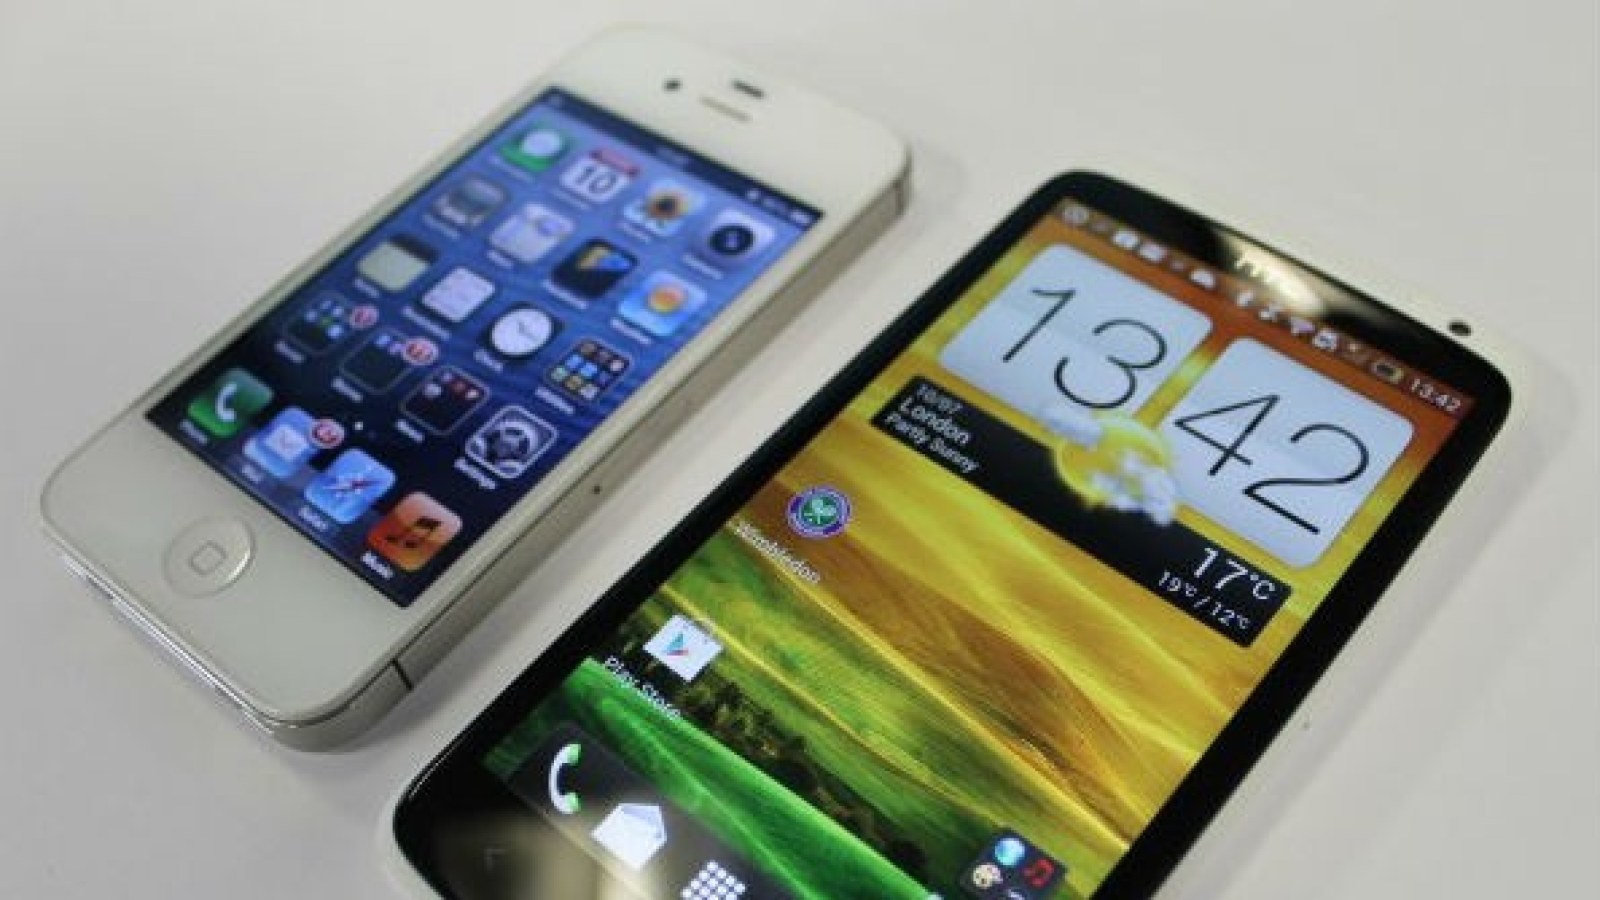 Apple iPhone 4S vs HTC One X